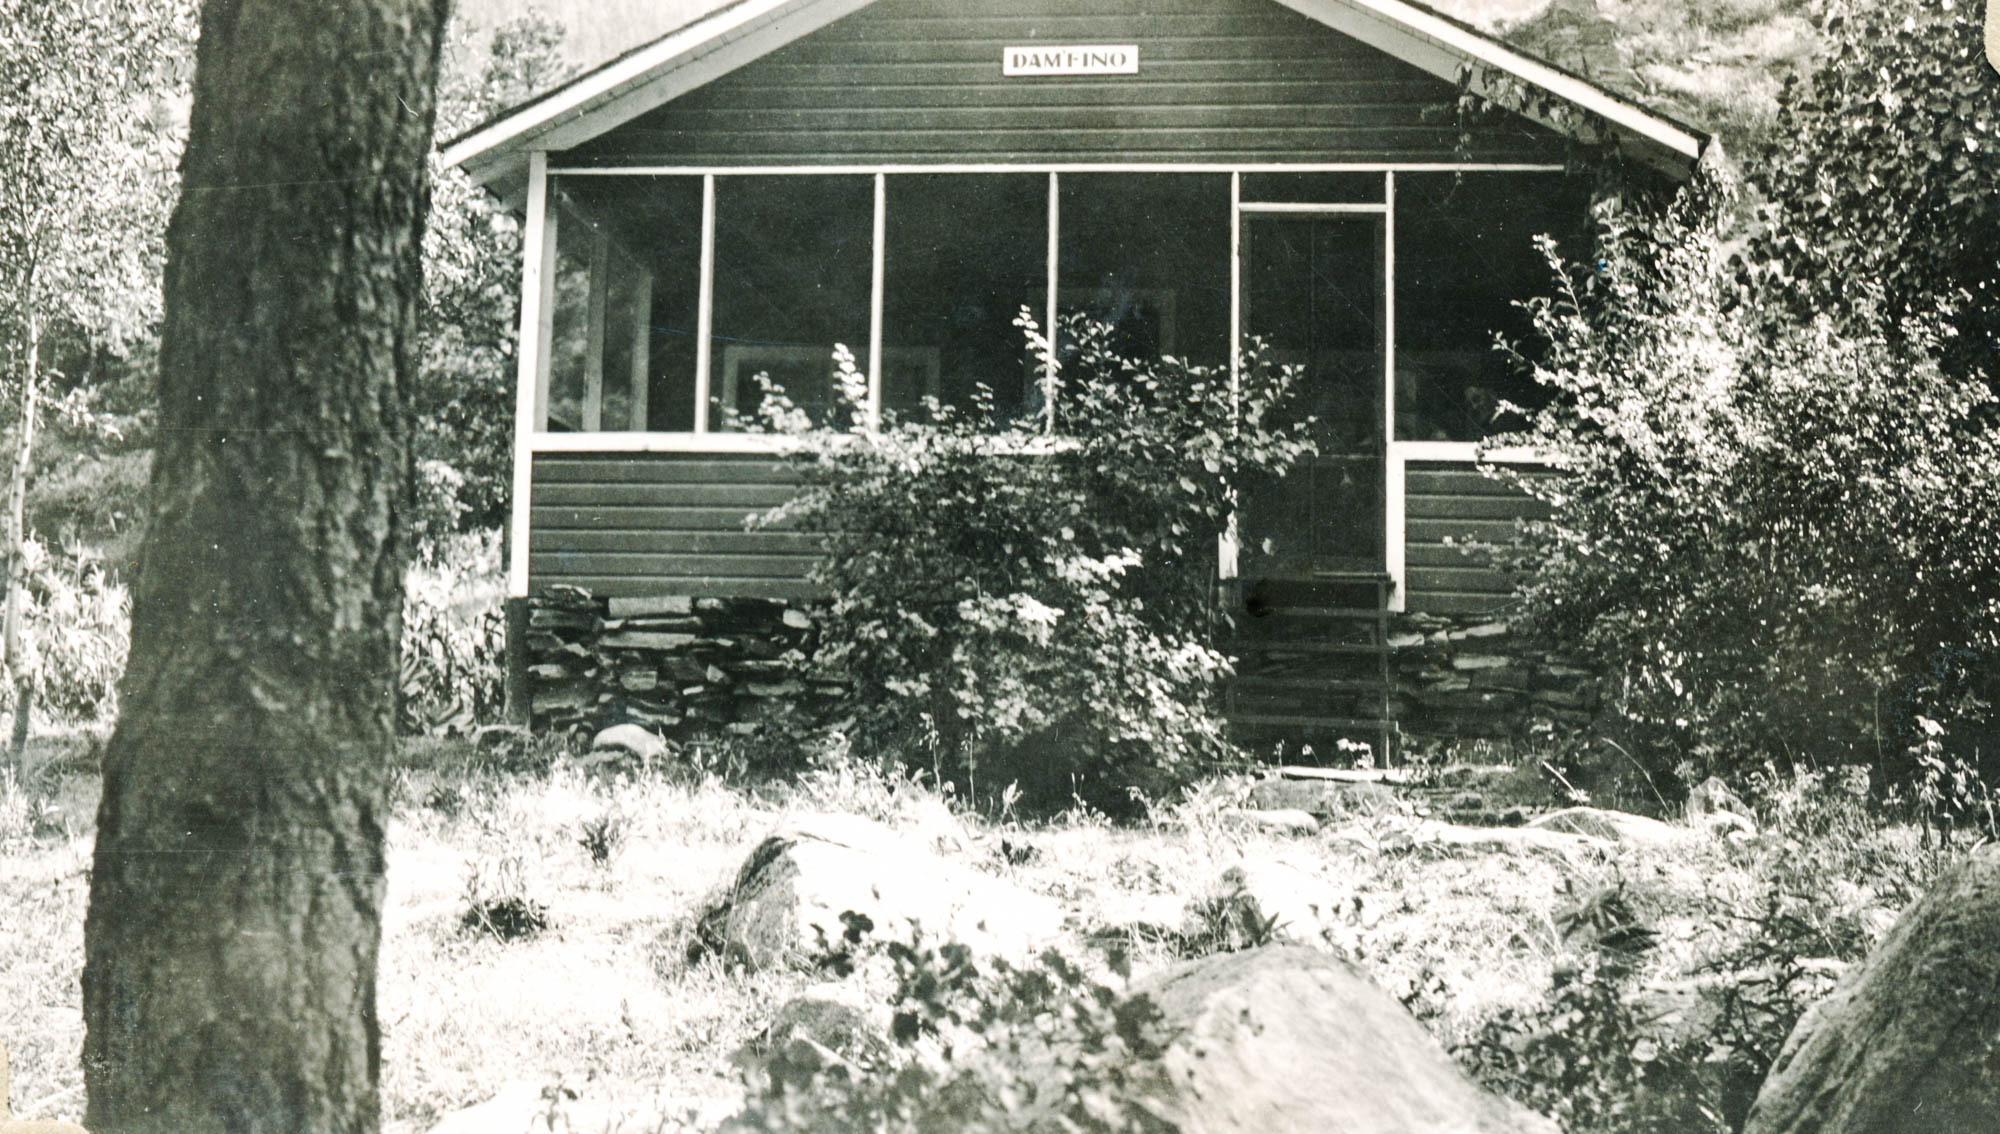 Idlewild Lodge - idlewildlodge.github.io - Circa 1930 - DAMFINO Facade